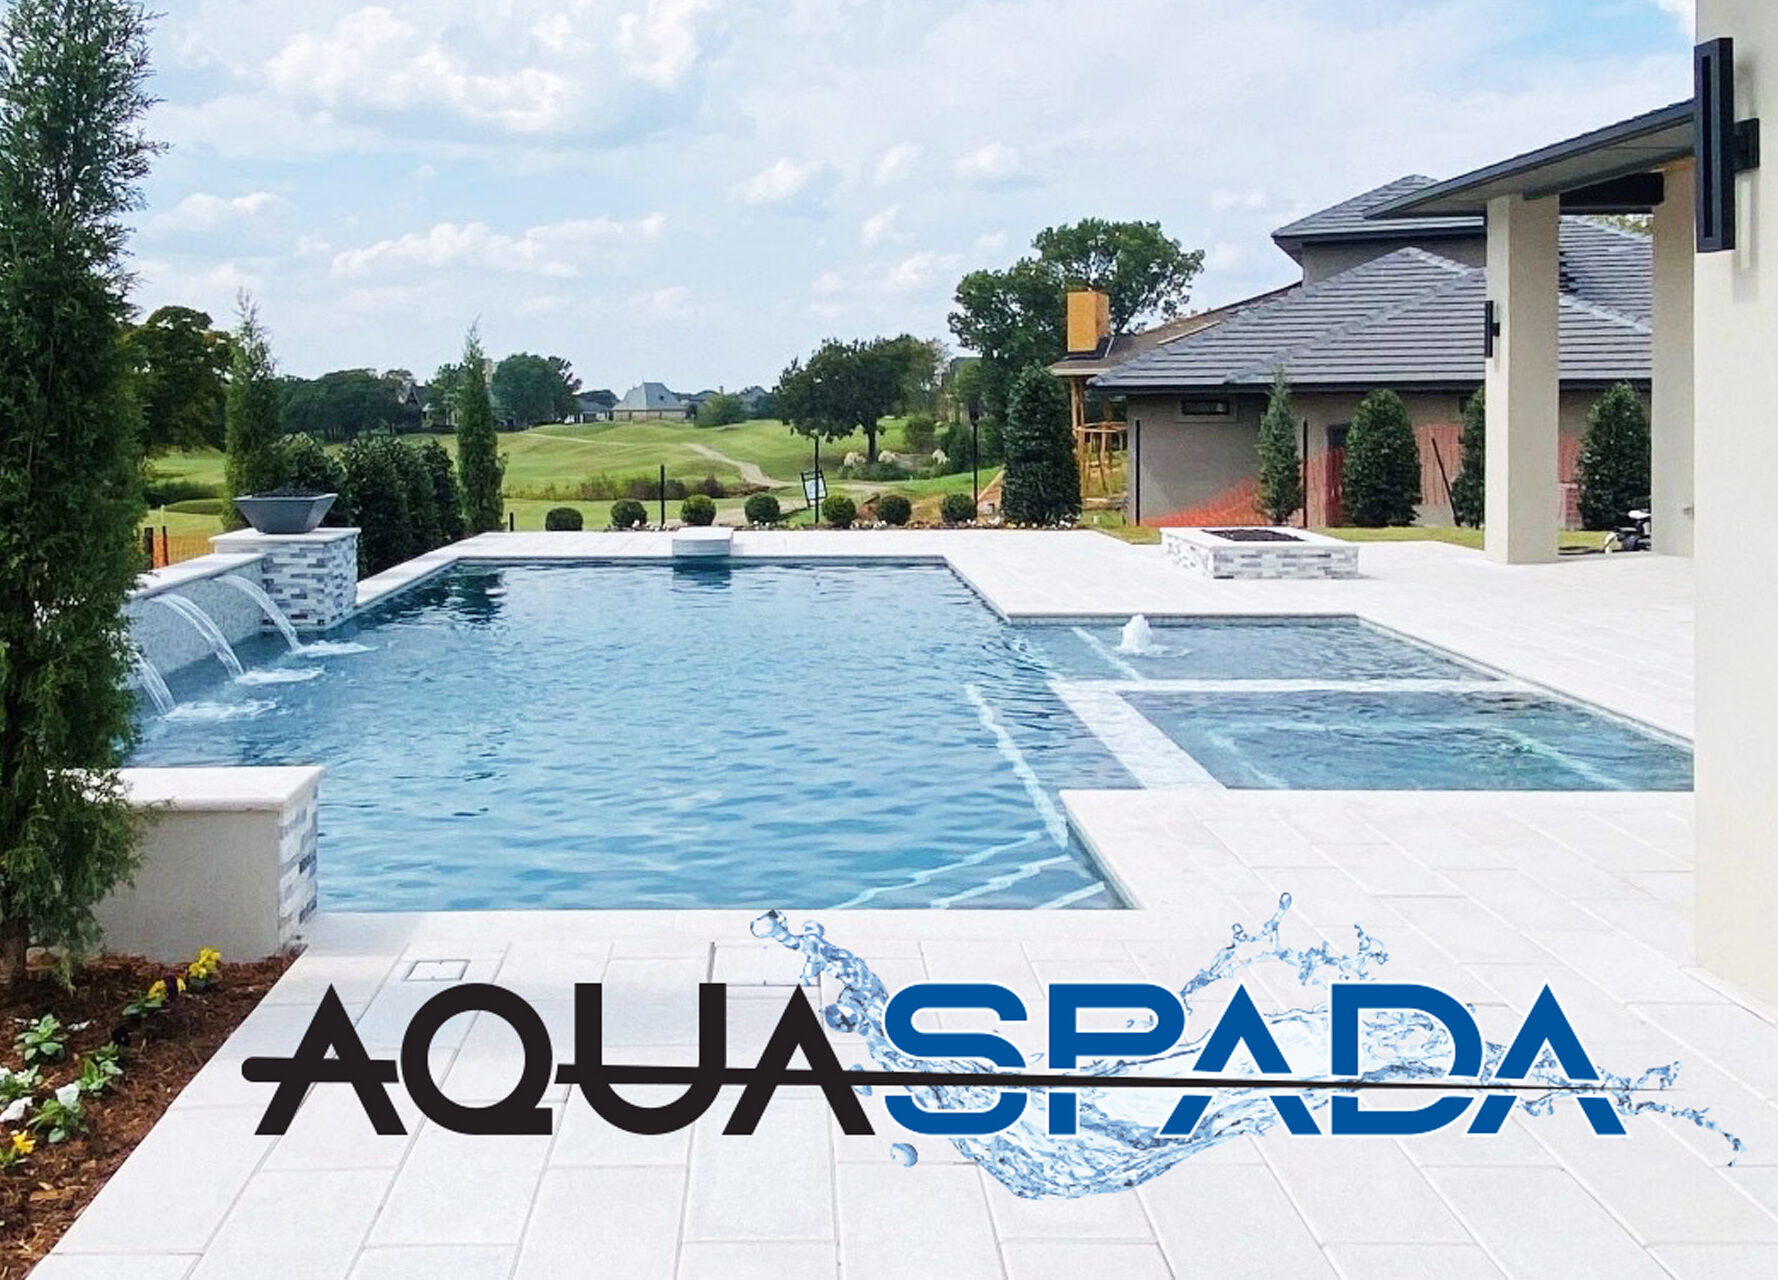 Aquaspada text overlay on a photo of a swimming pool.